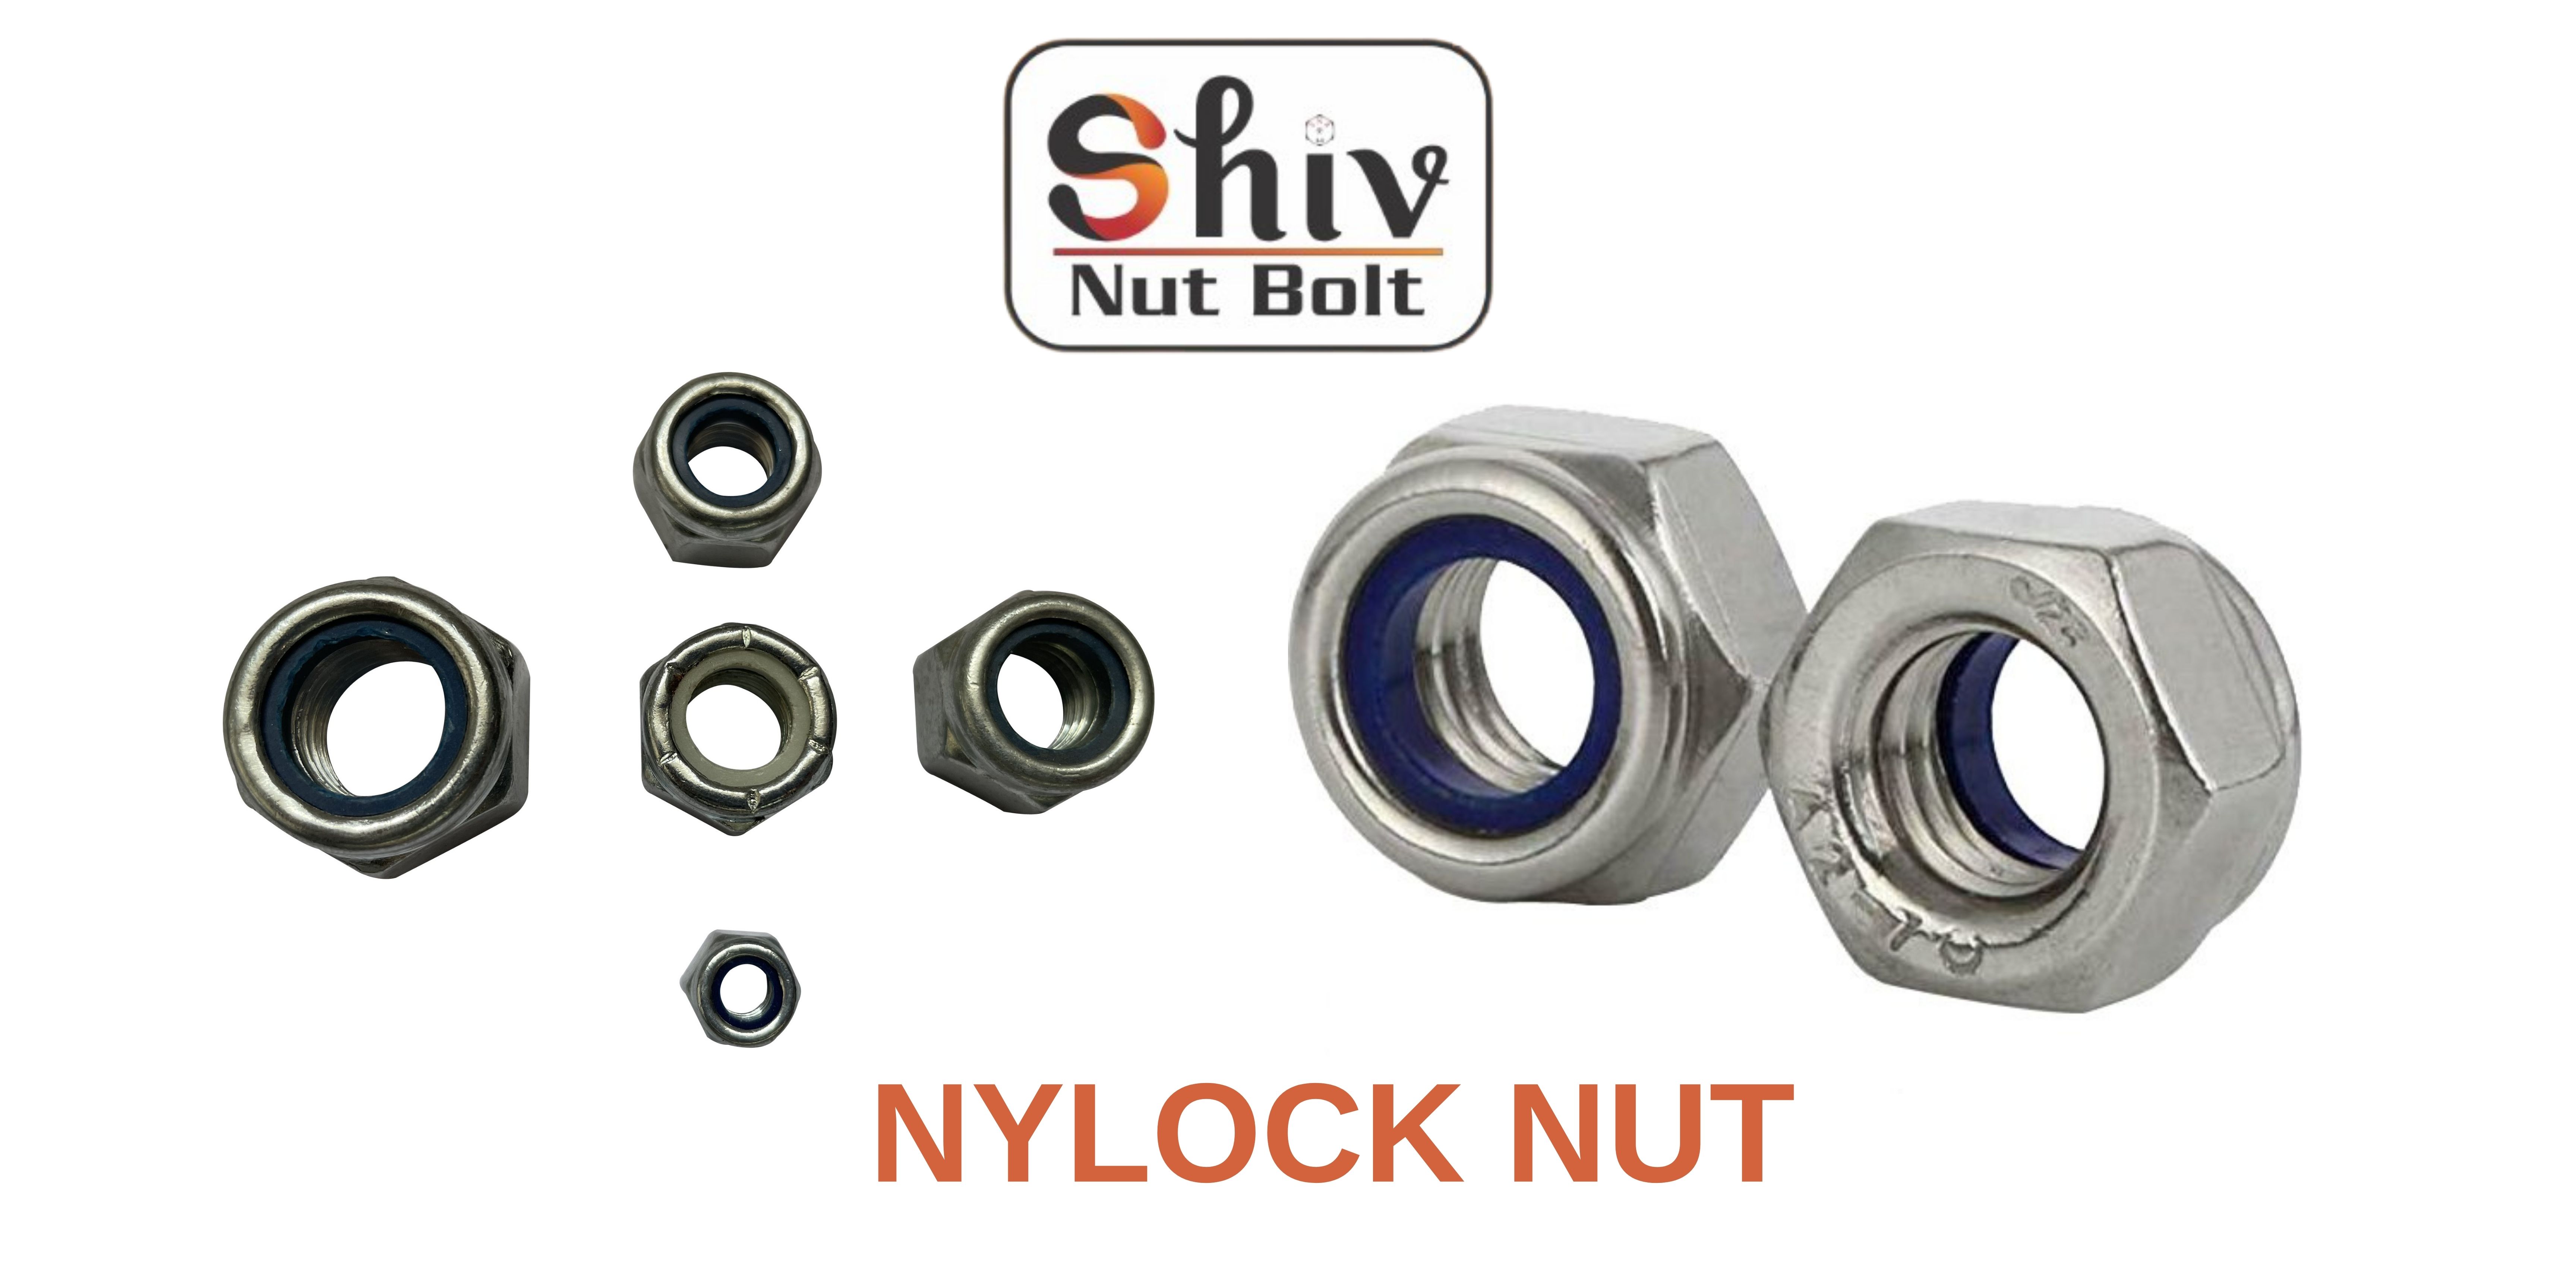 MS Nut Lock